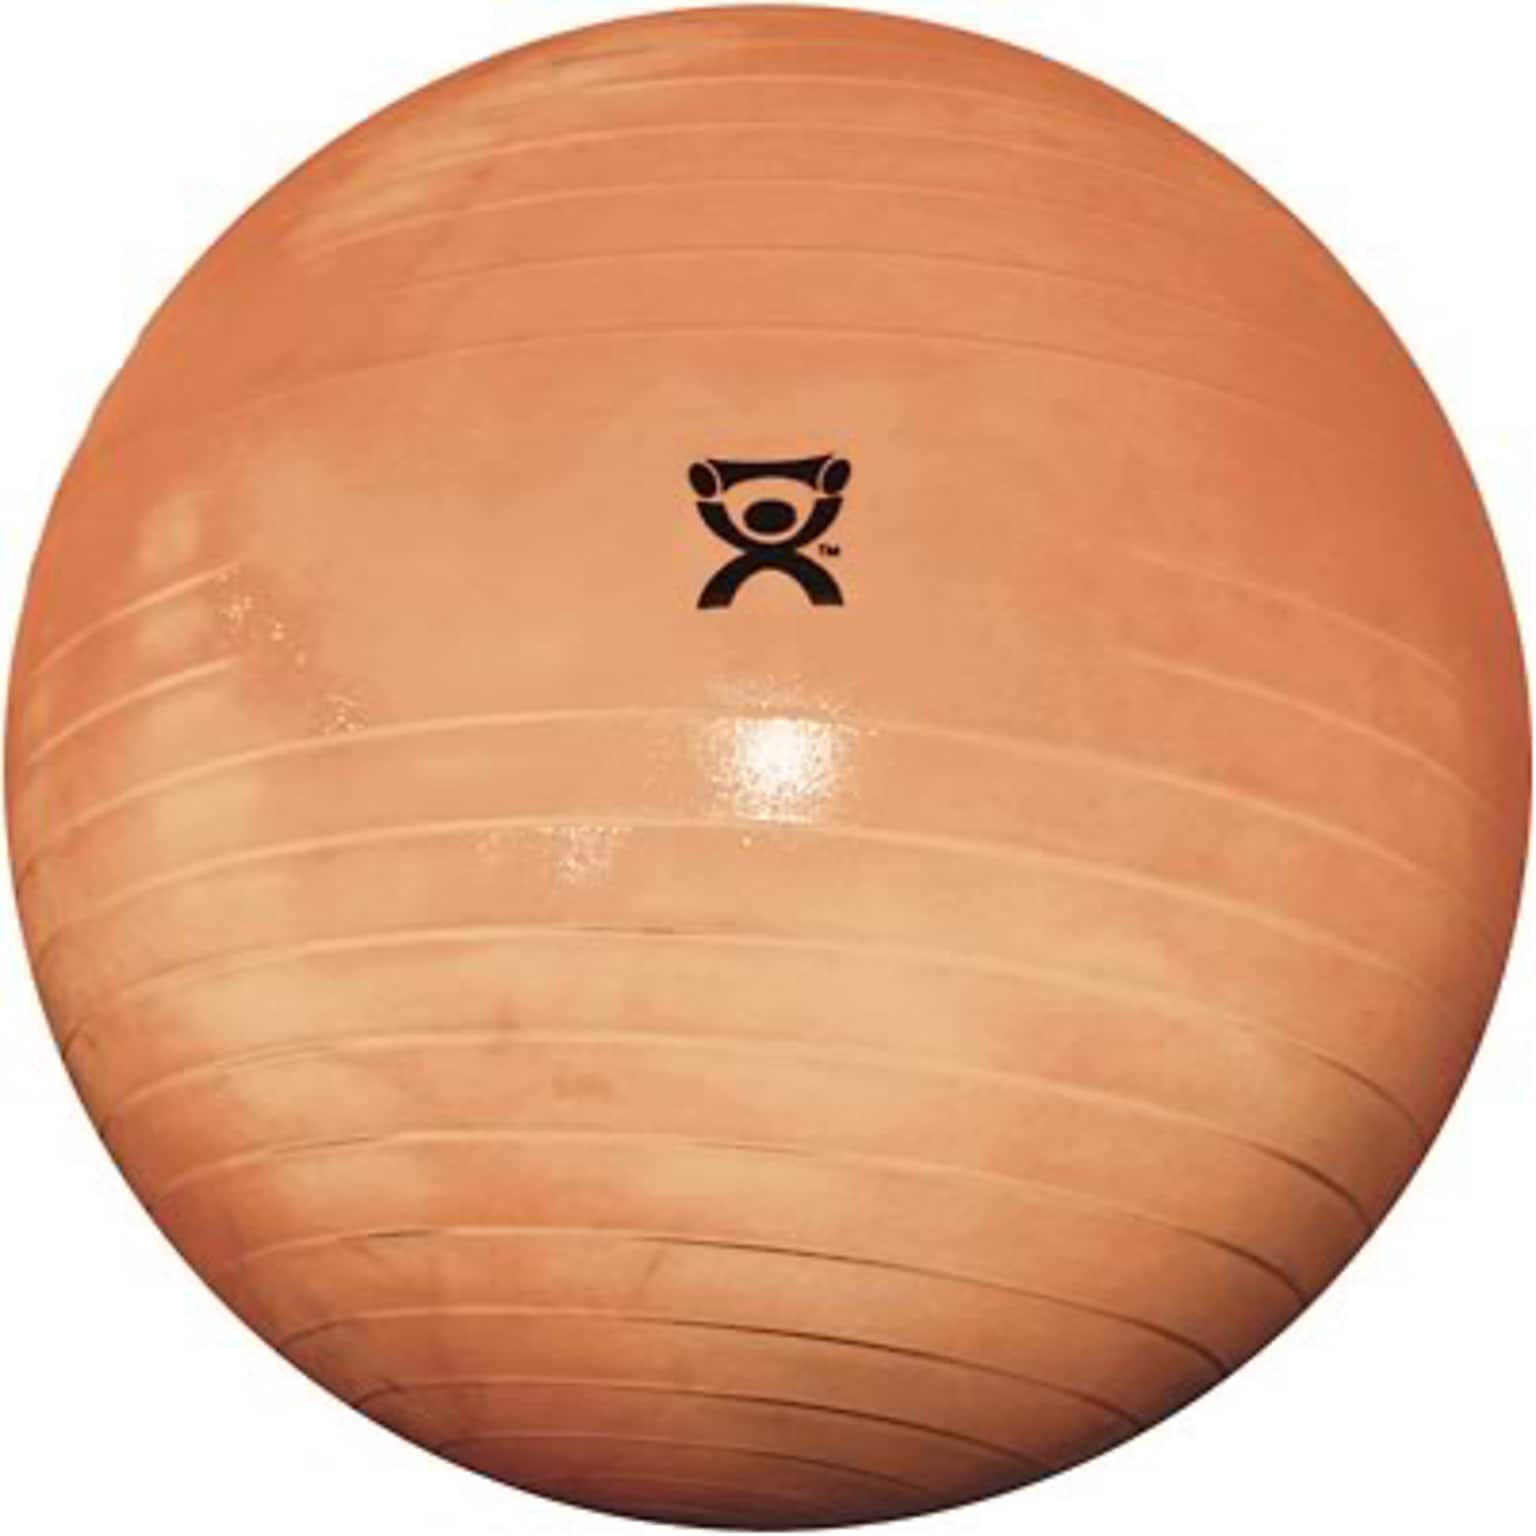 Cando® Inflatable ABS™ Exercise Ball; 55cm - 22, Orange